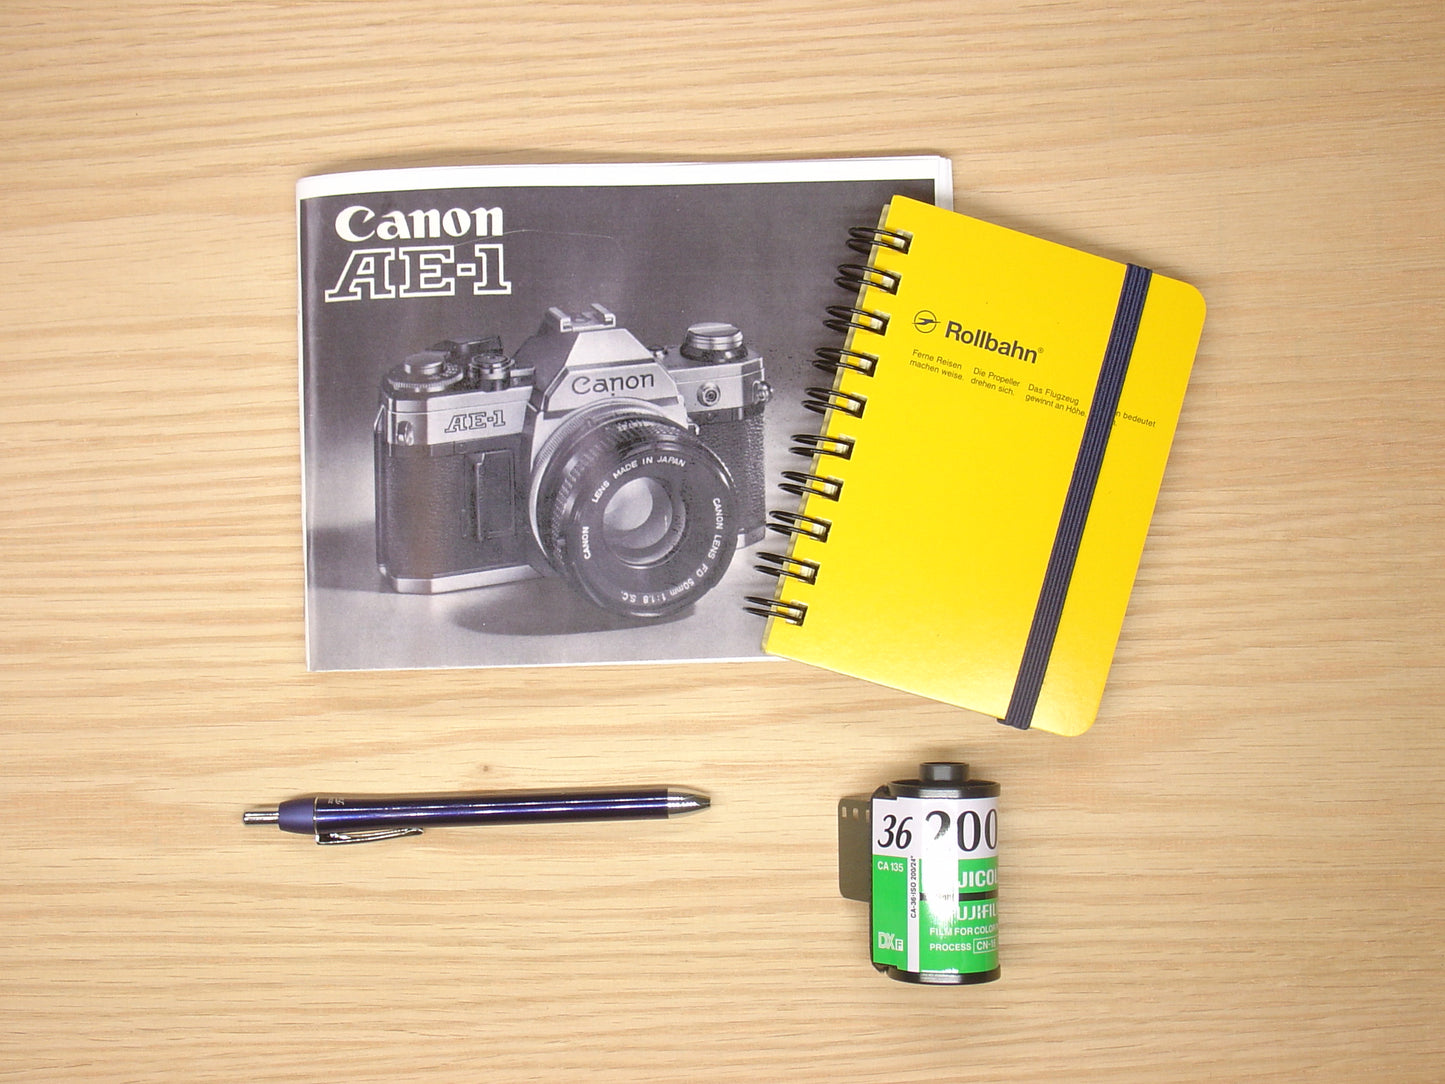 Canon AE-1 SLR camera kit